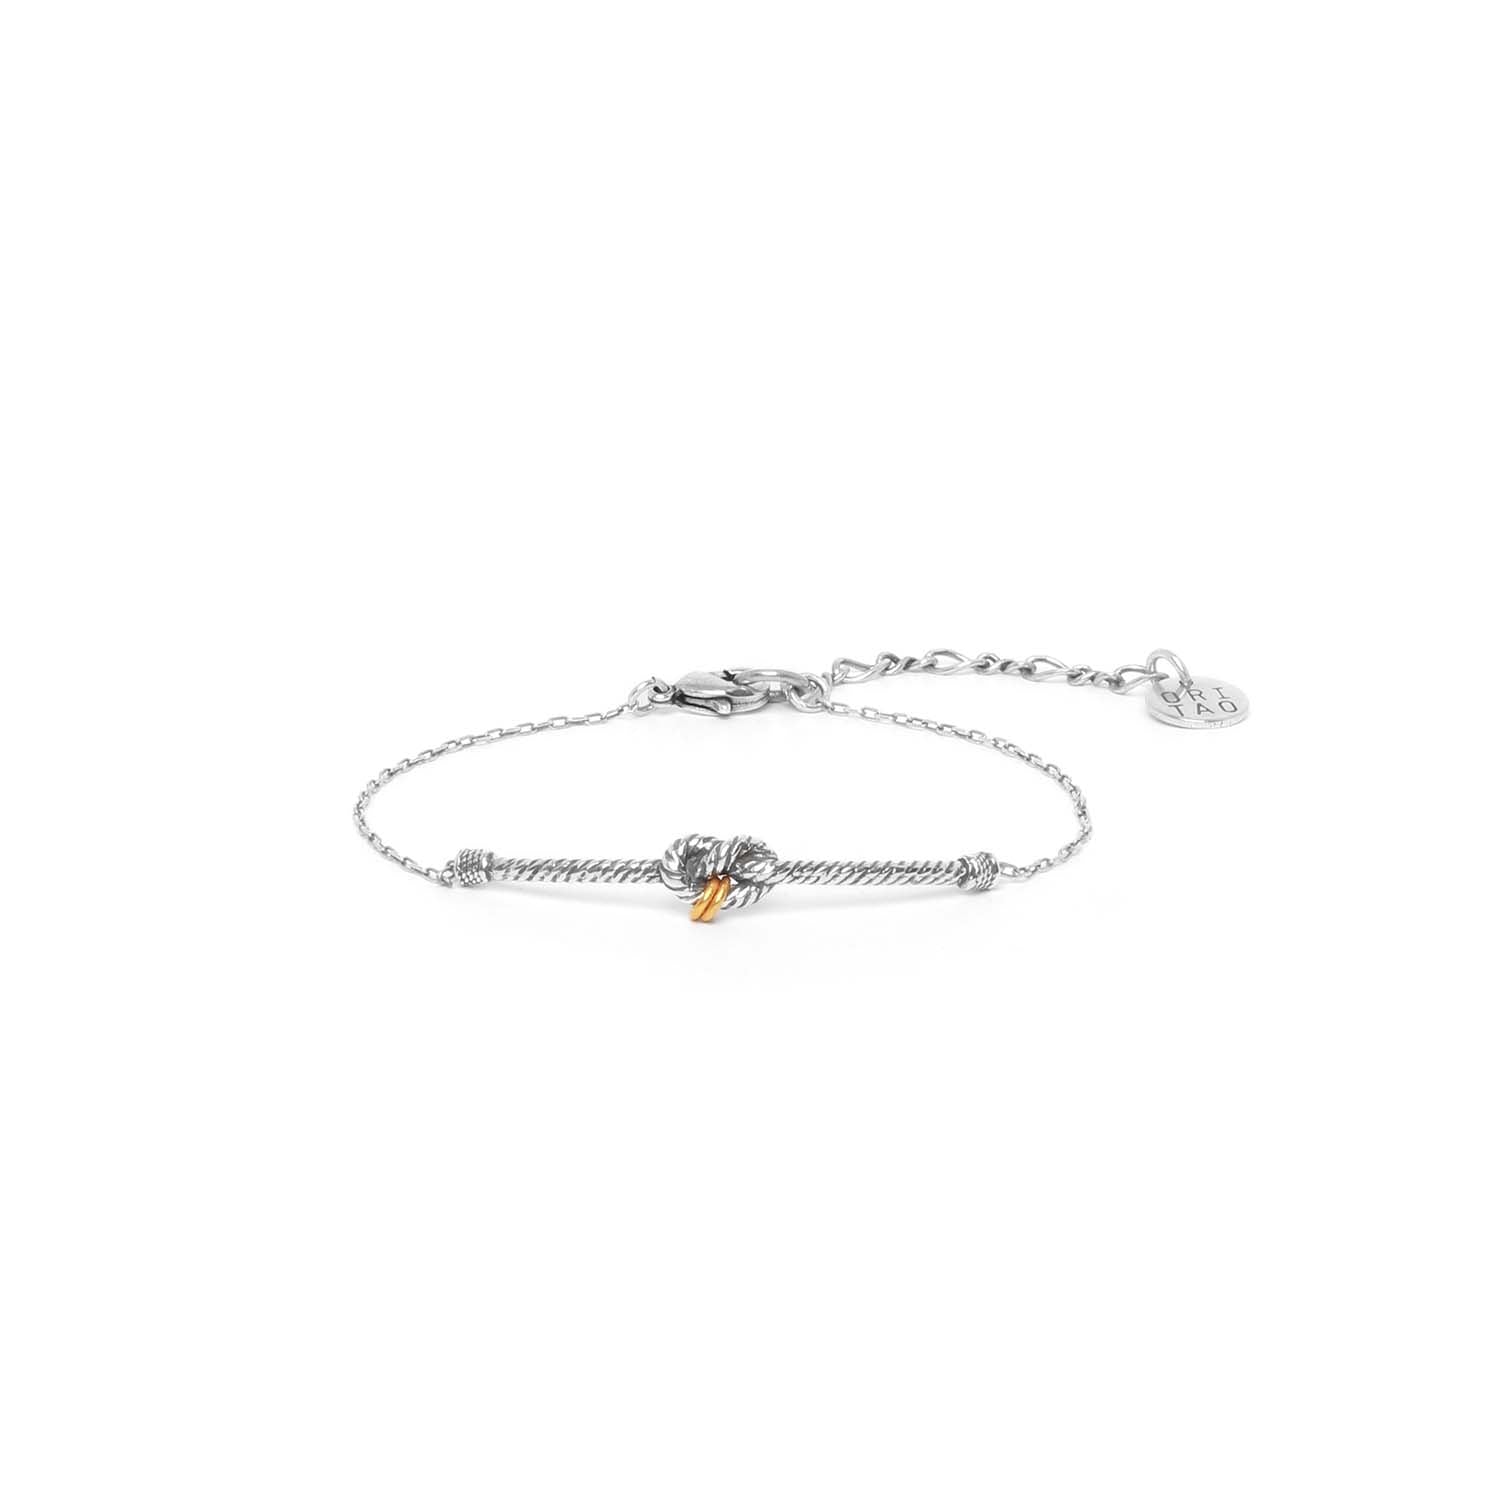 Ori Tao Thin Chain Bracelet - La Marina Collection from France